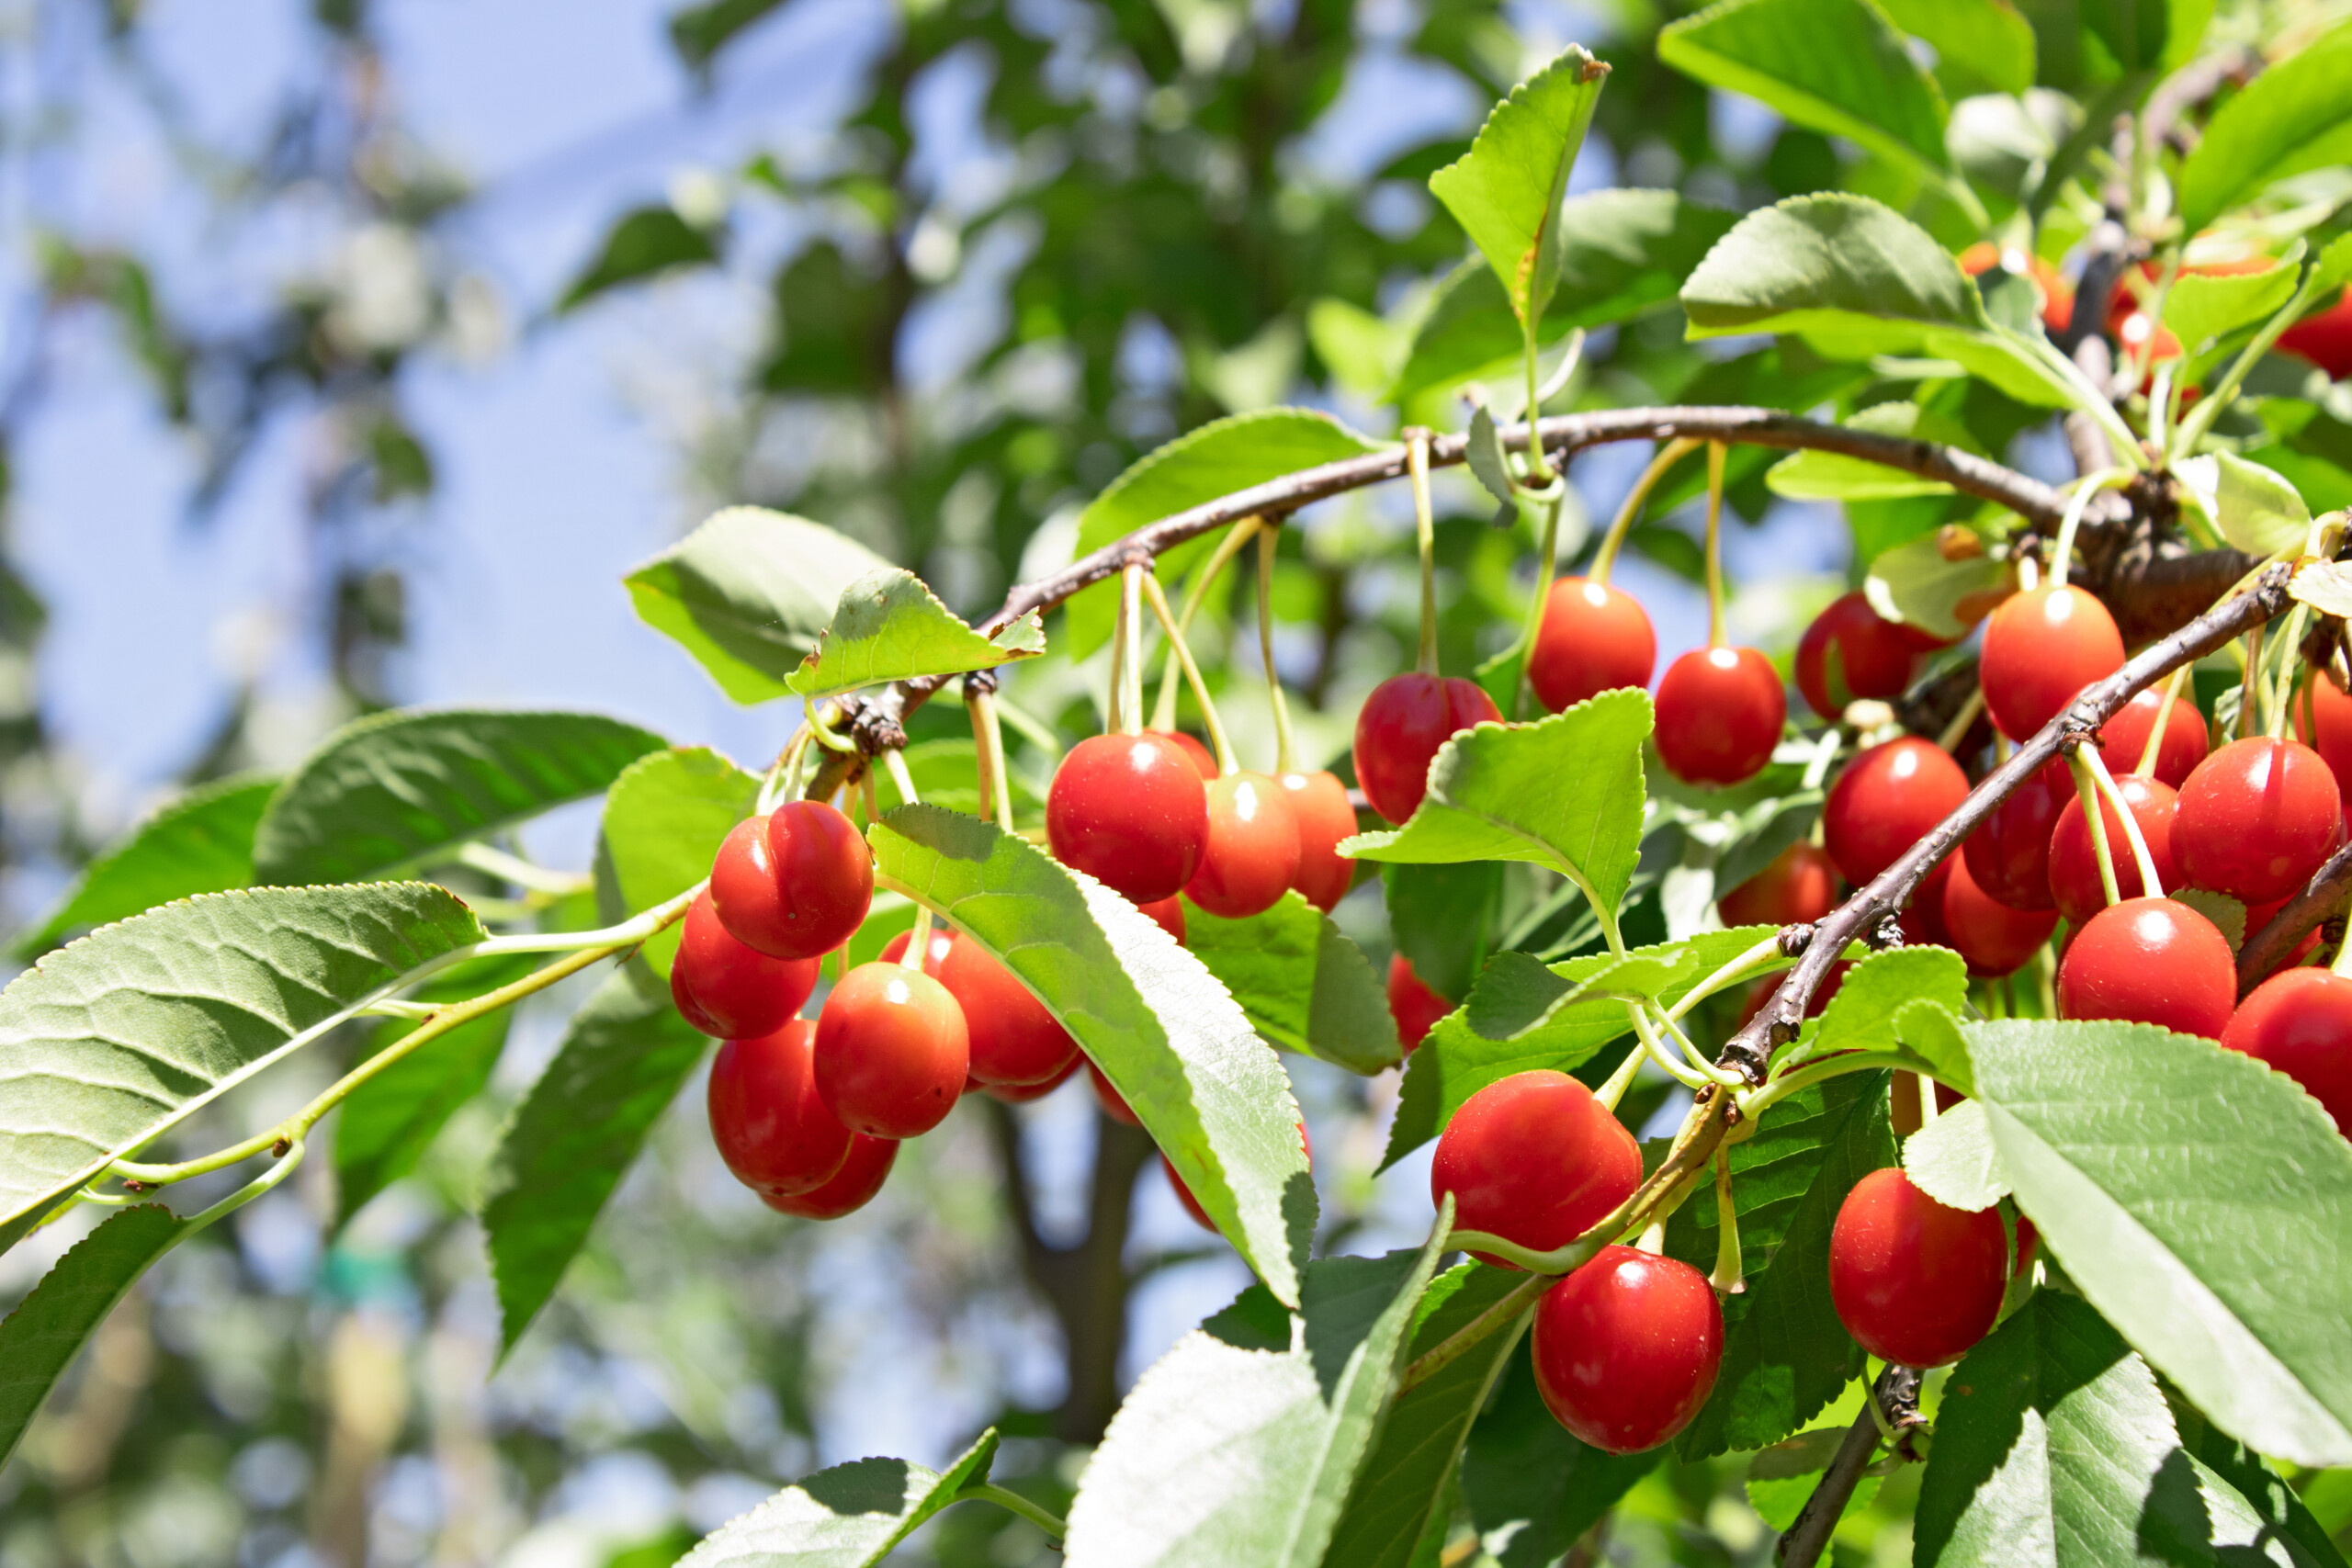 https://www.moananursery.com/wp-content/uploads/2023/04/evans_cherry-tree_fruit-close-up-scaled.jpg